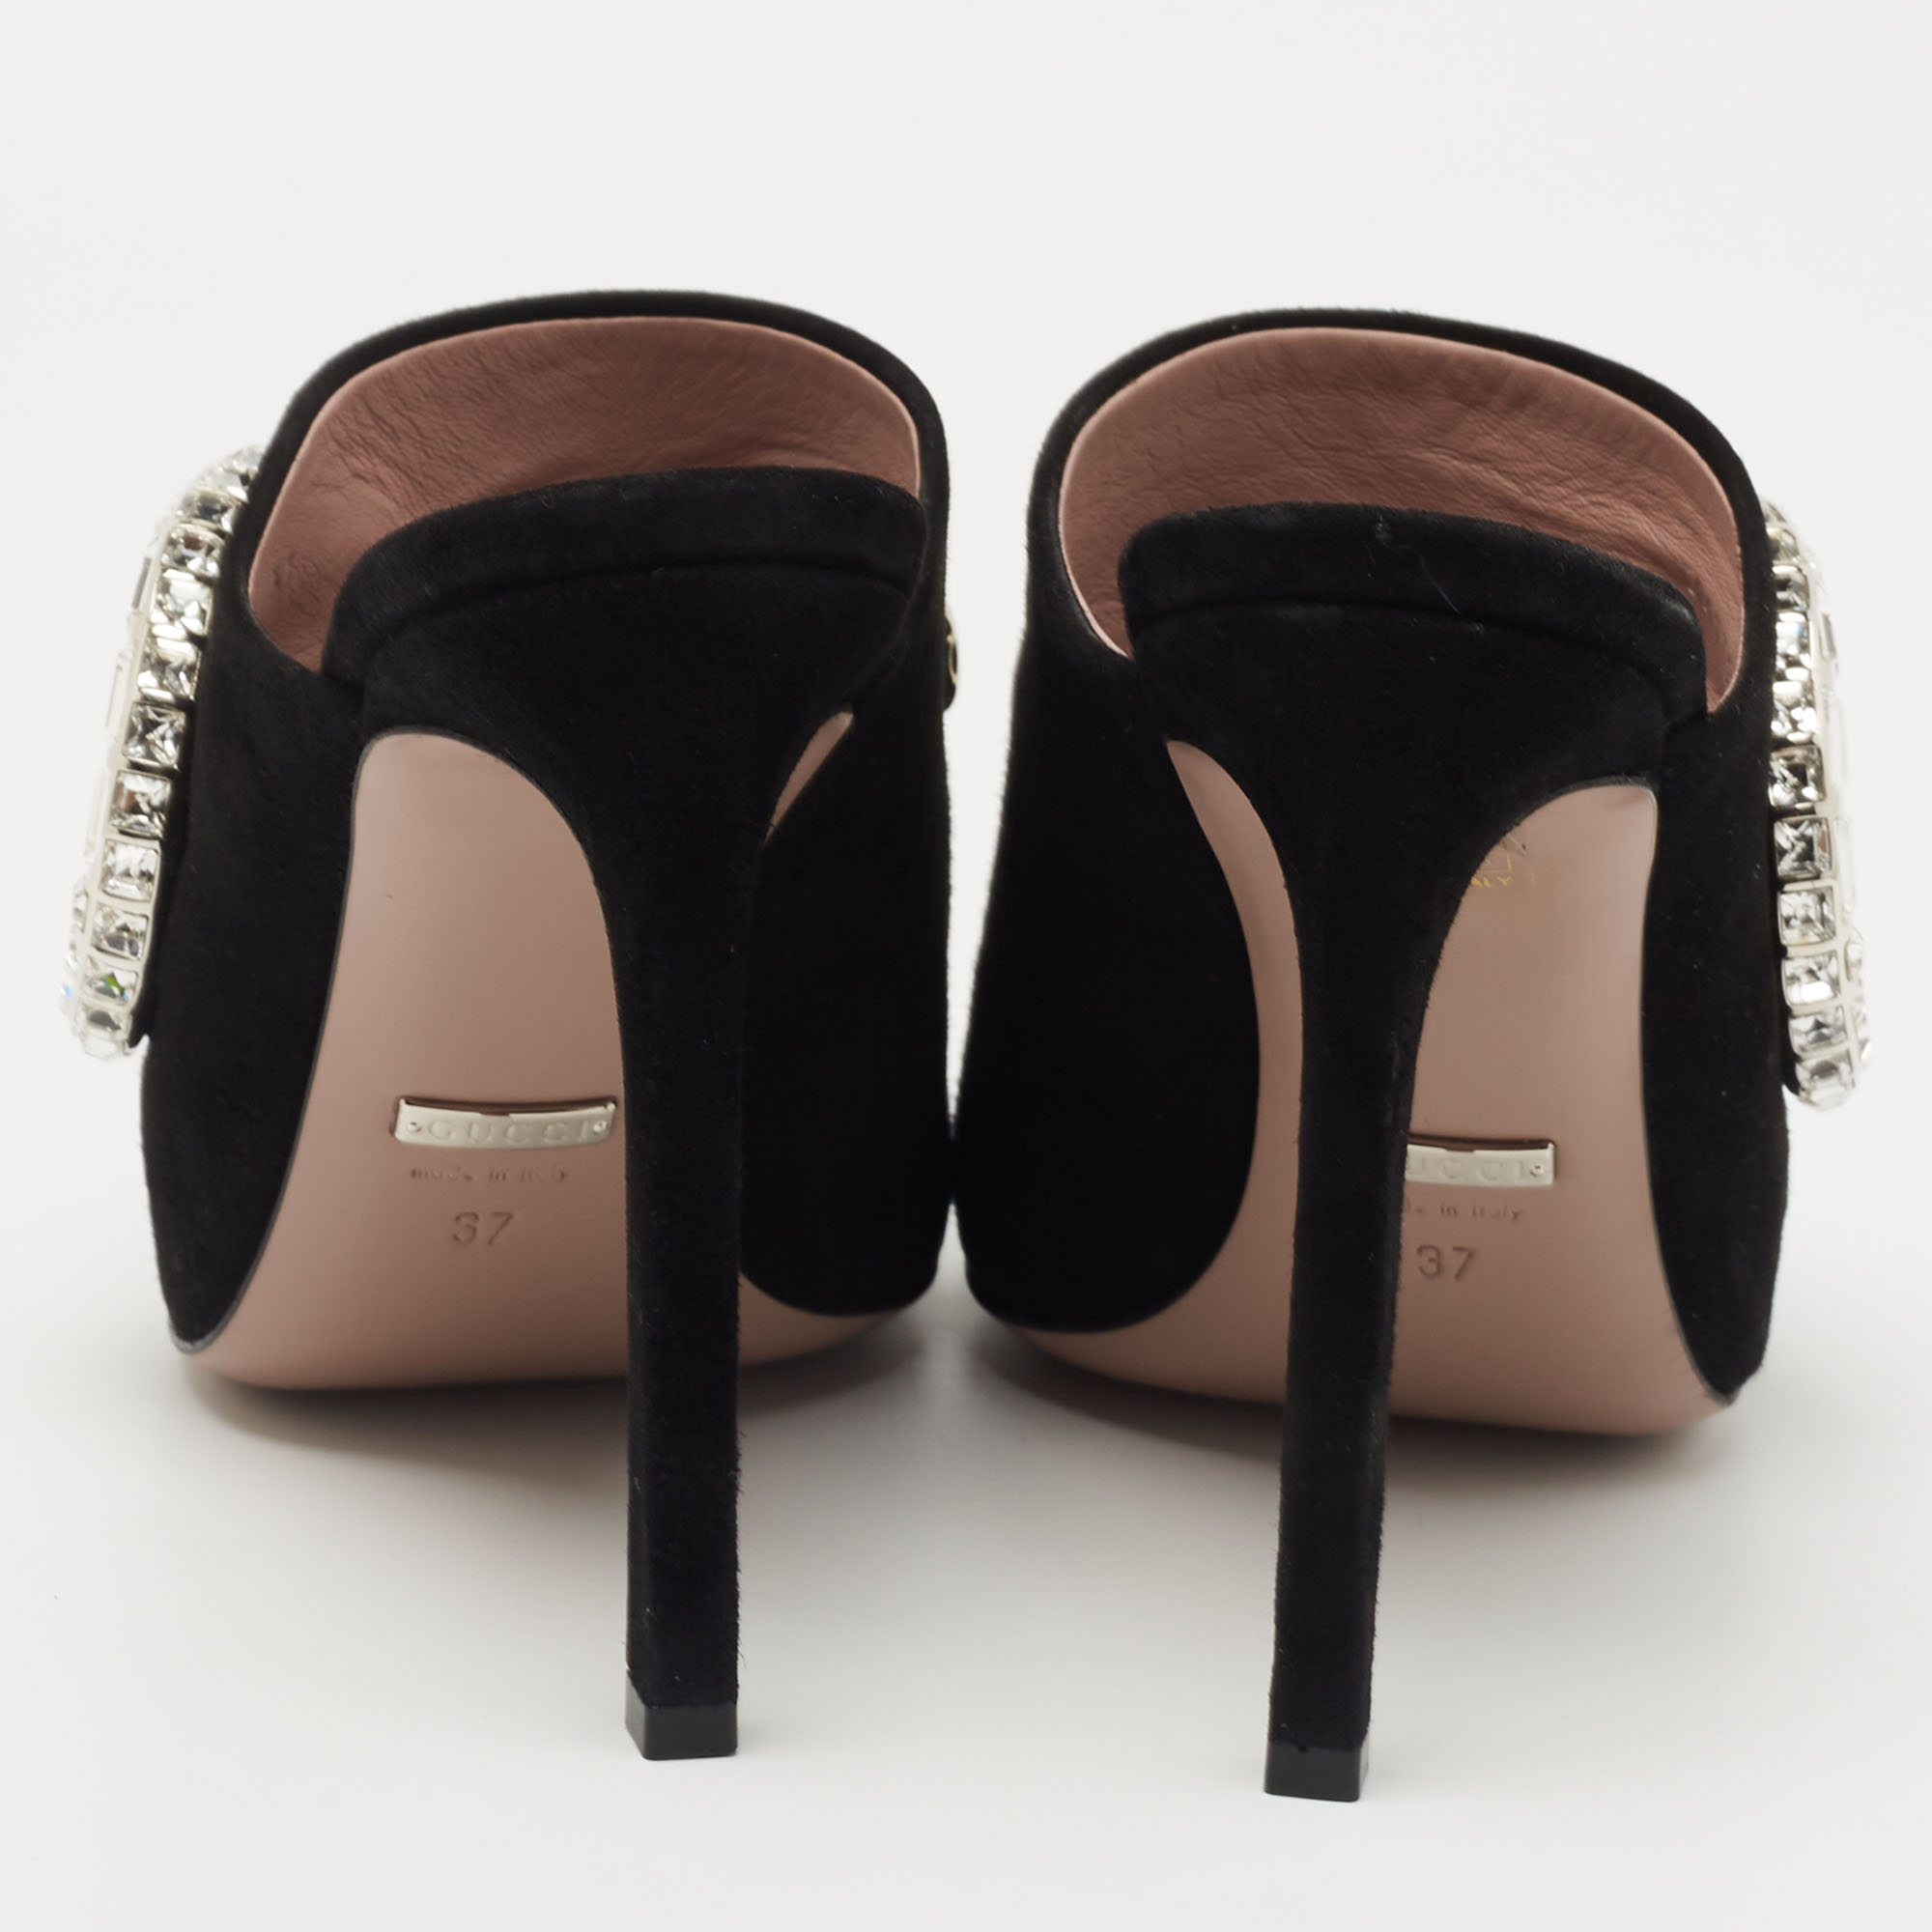 Gucci Black Suede Maxime Crystal Embellished Mule Sandals Size 37